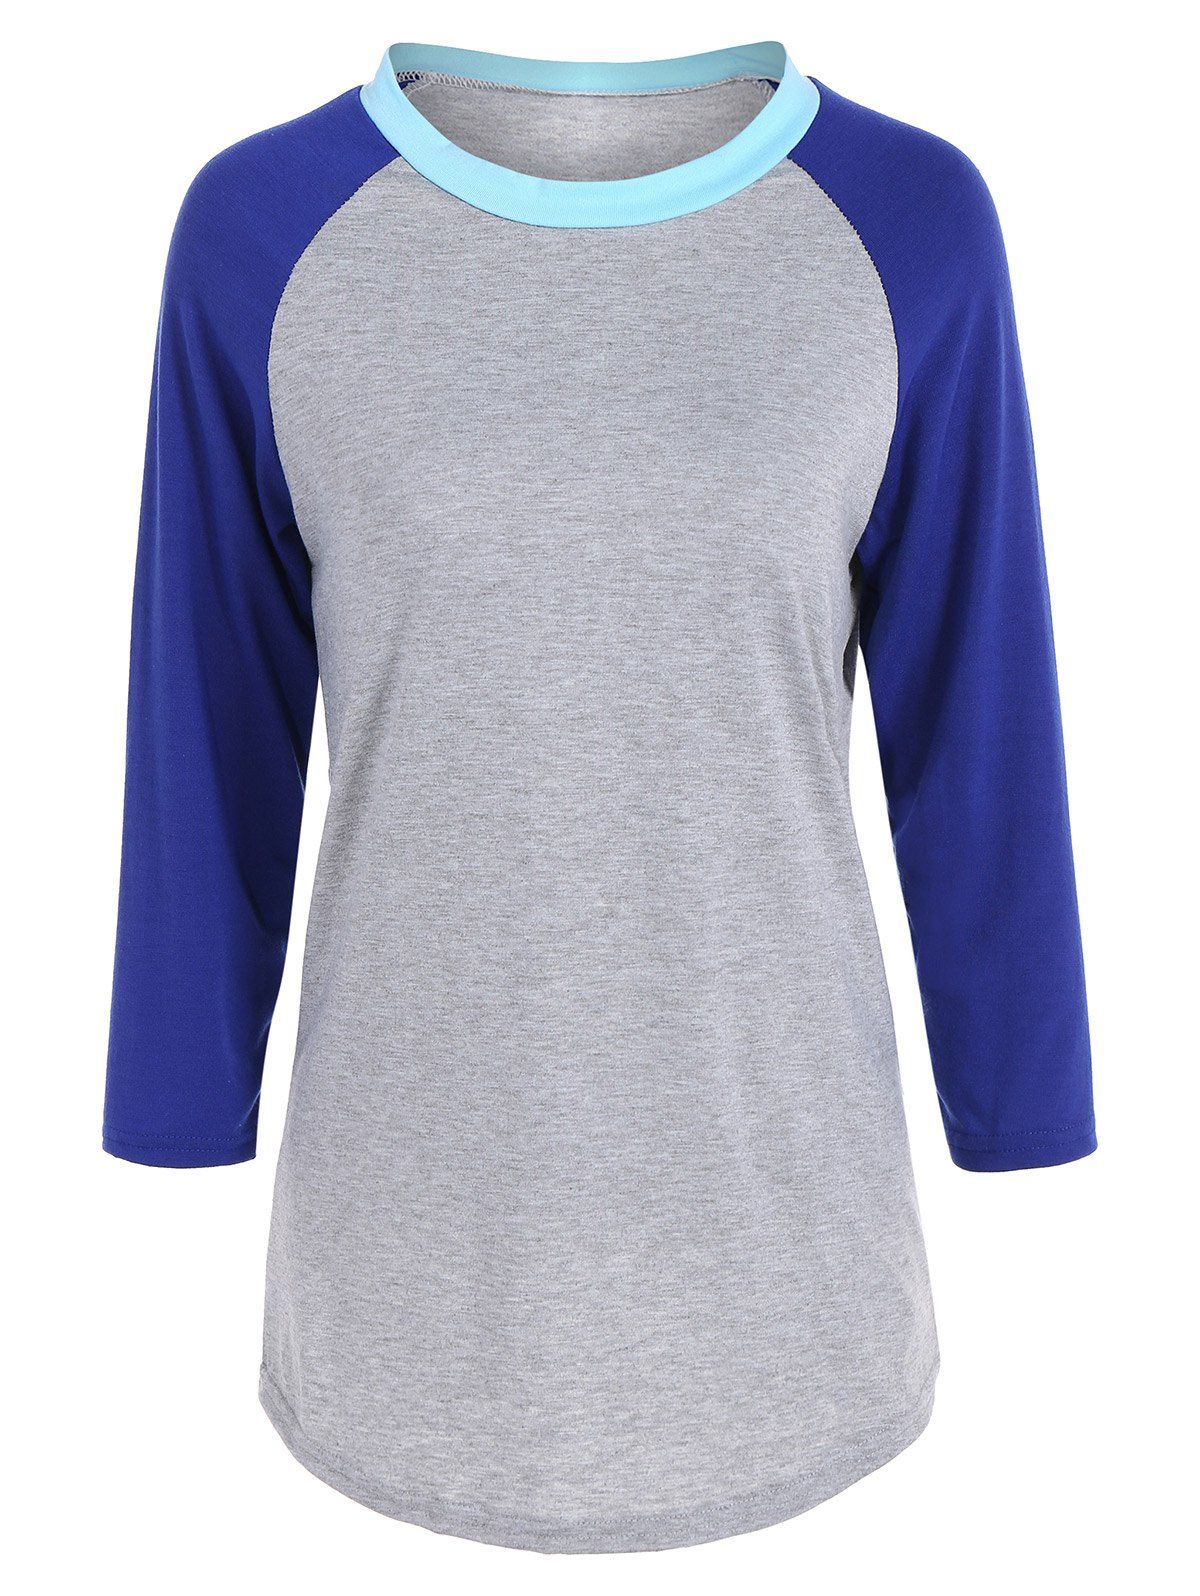 [41% OFF] 2020 Color Block Raglan Sleeve Panel T-Shirt In GRAY | DressLily